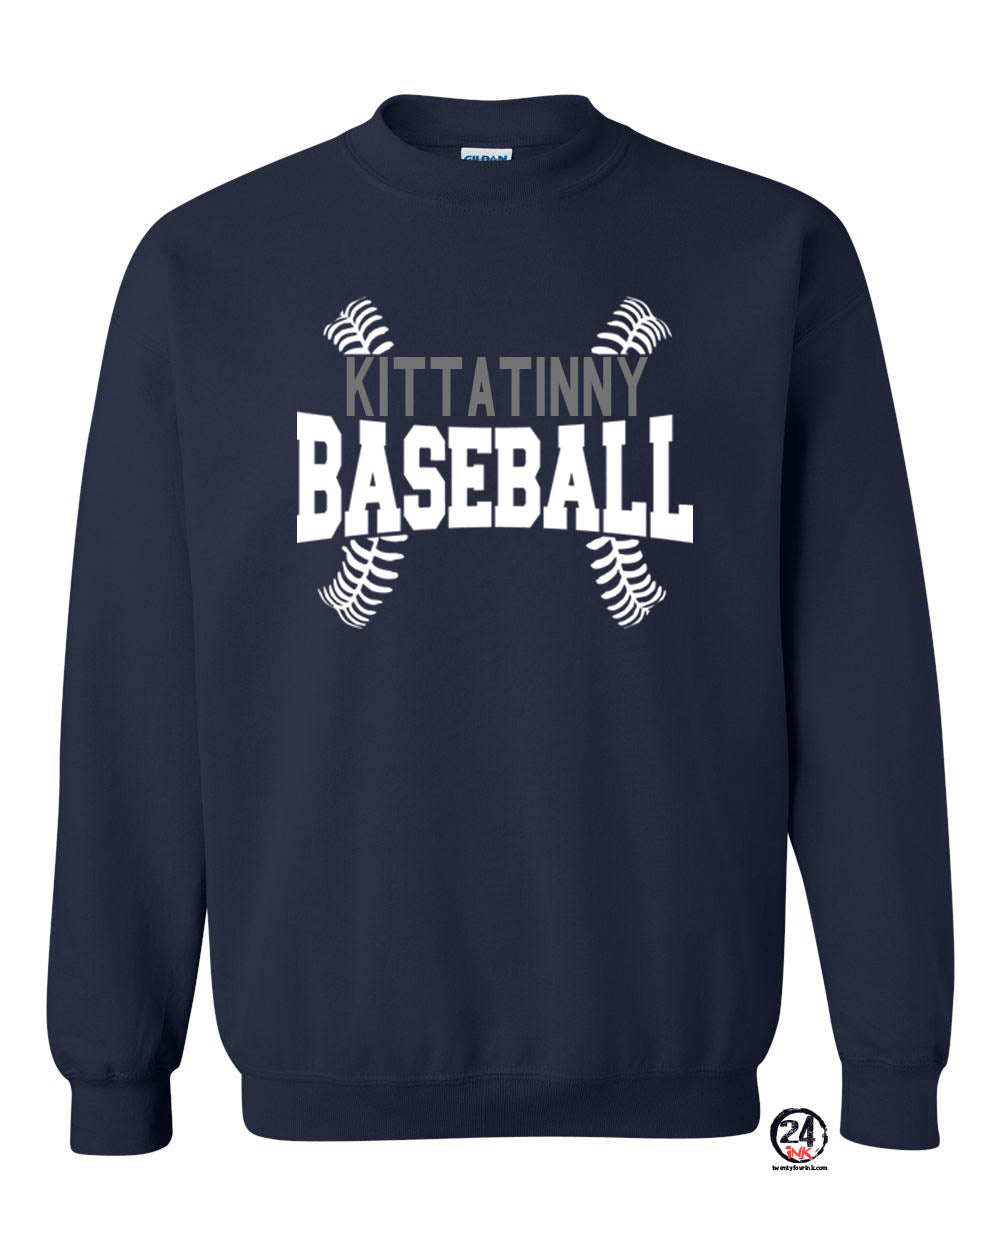 Kittatinny Baseball non hooded sweatshirt